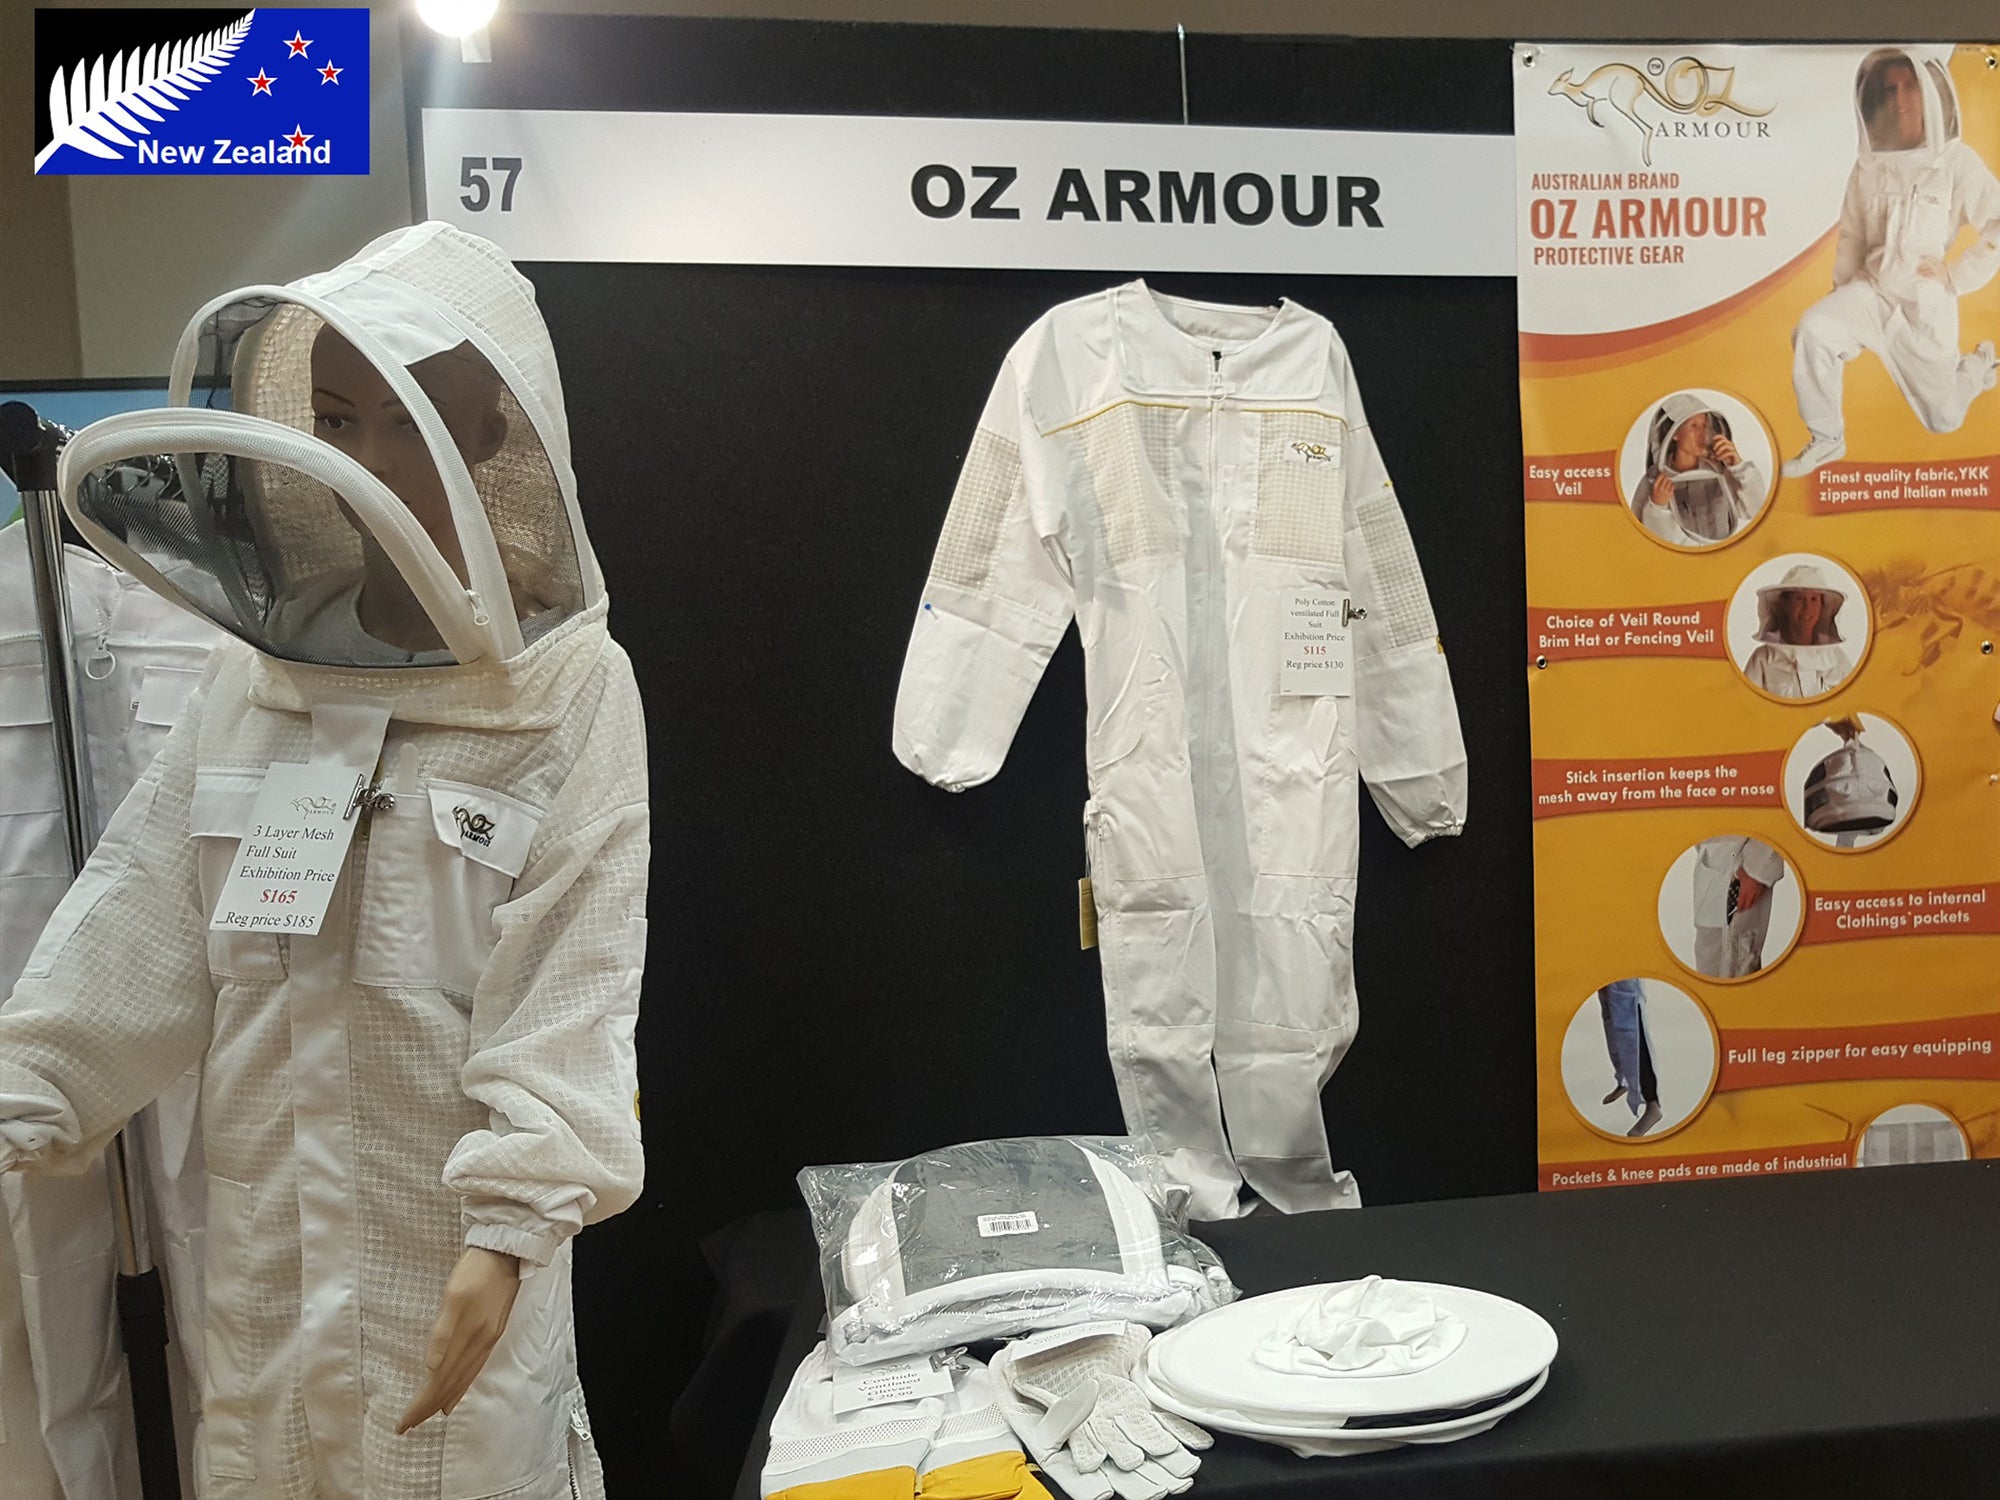 oz armour bee suit in Australia